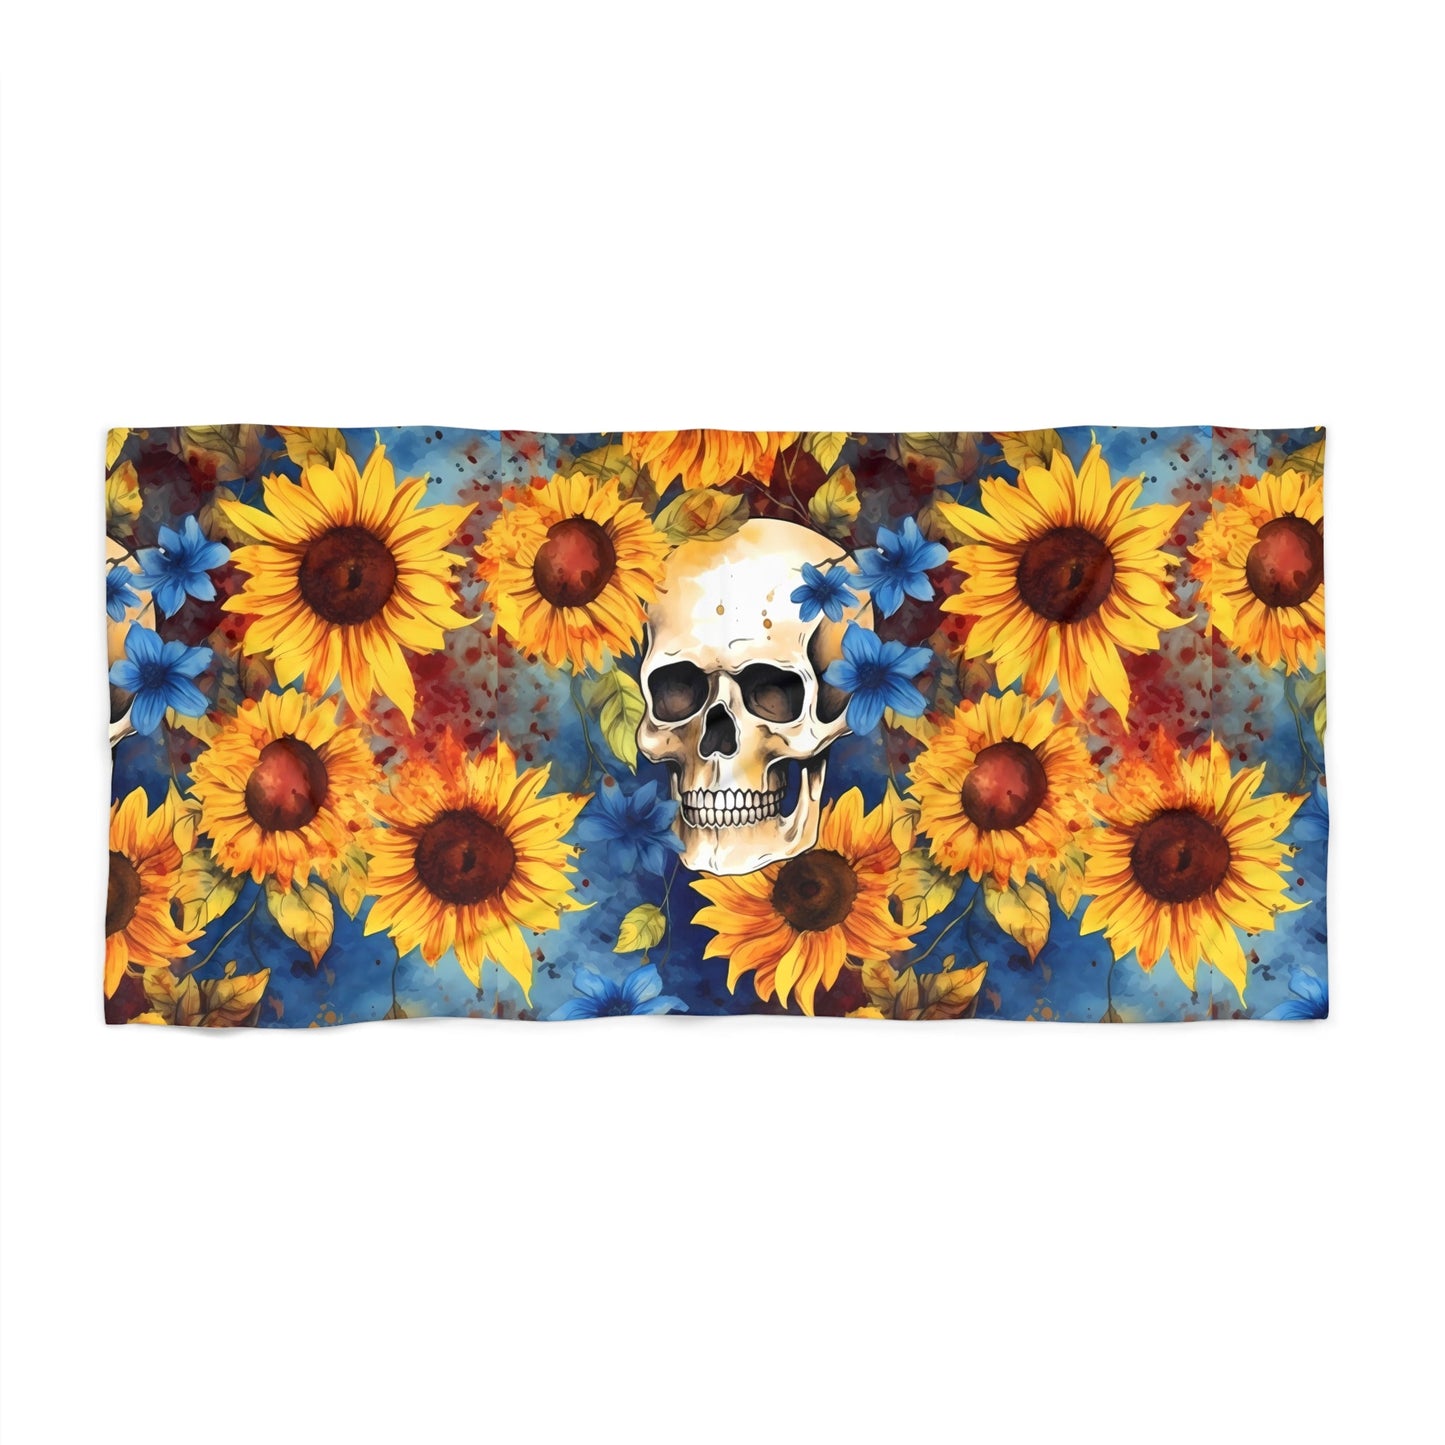 Sunflower Skull Beach TowelHome DecorVTZdesigns30" × 60"BathBathroombeach